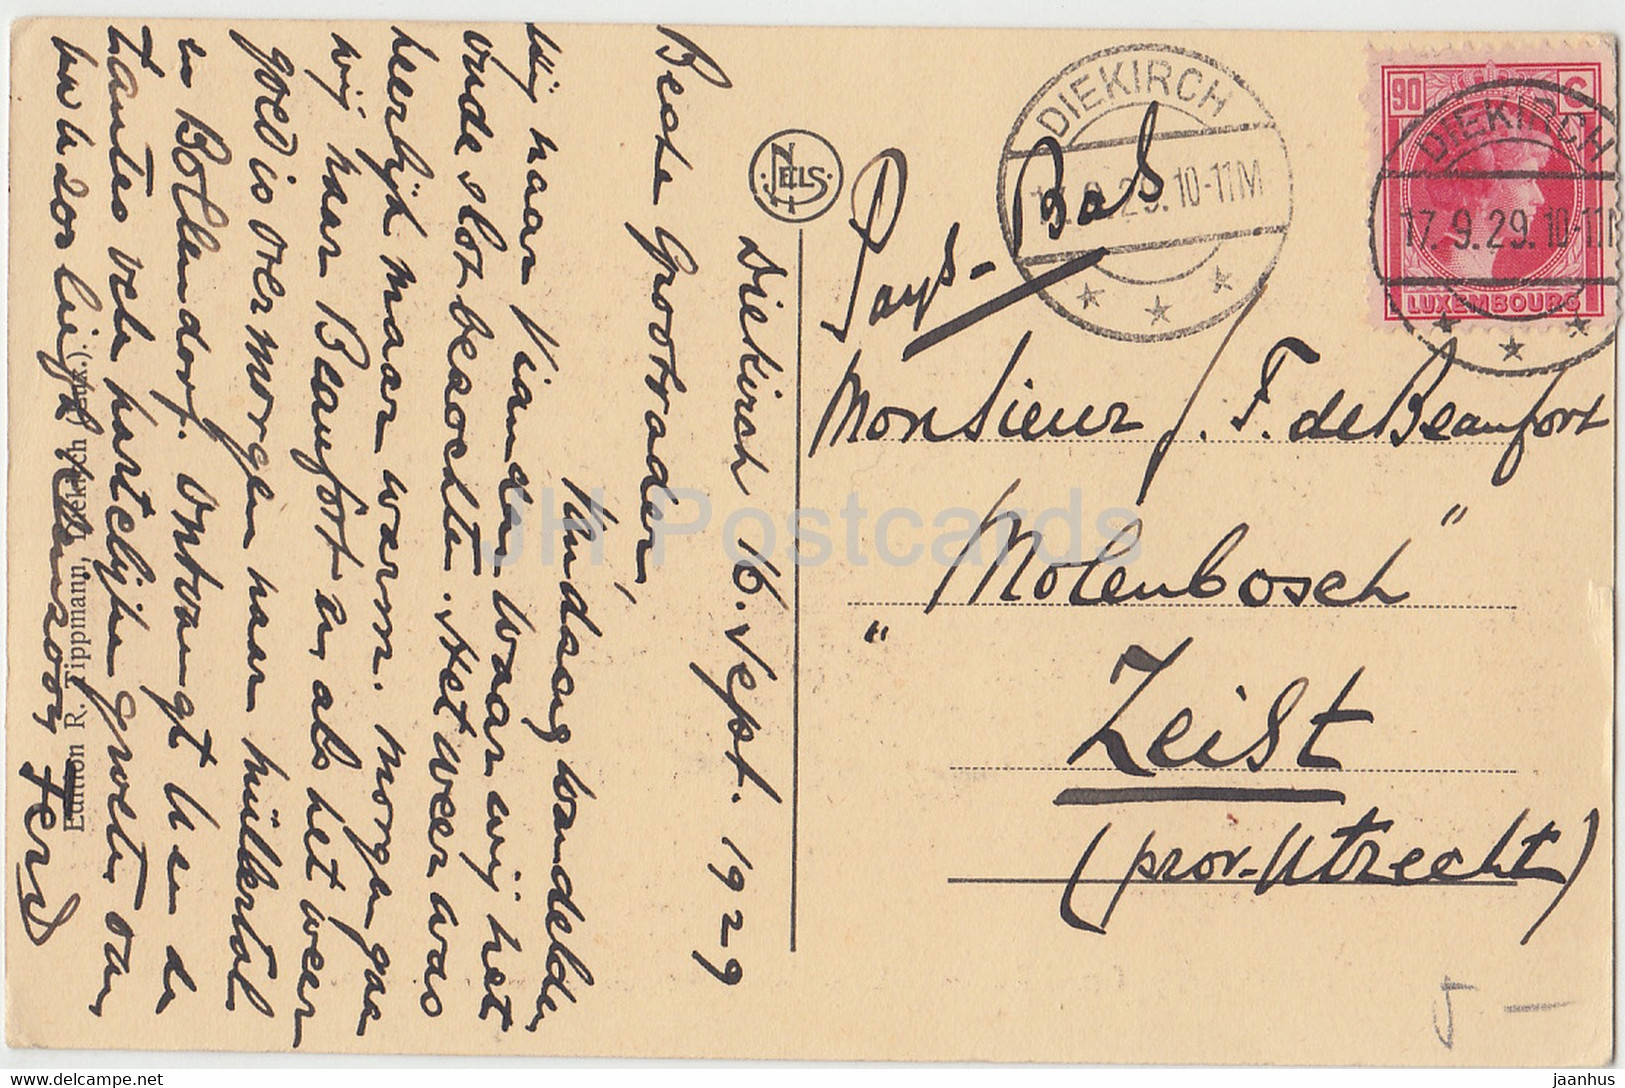 Grand Duche De Luxembourg - Chateau Granducal De Colmar Berg - Castle - Old Postcard - 1929 - Luxembourg - Used - Bourscheid